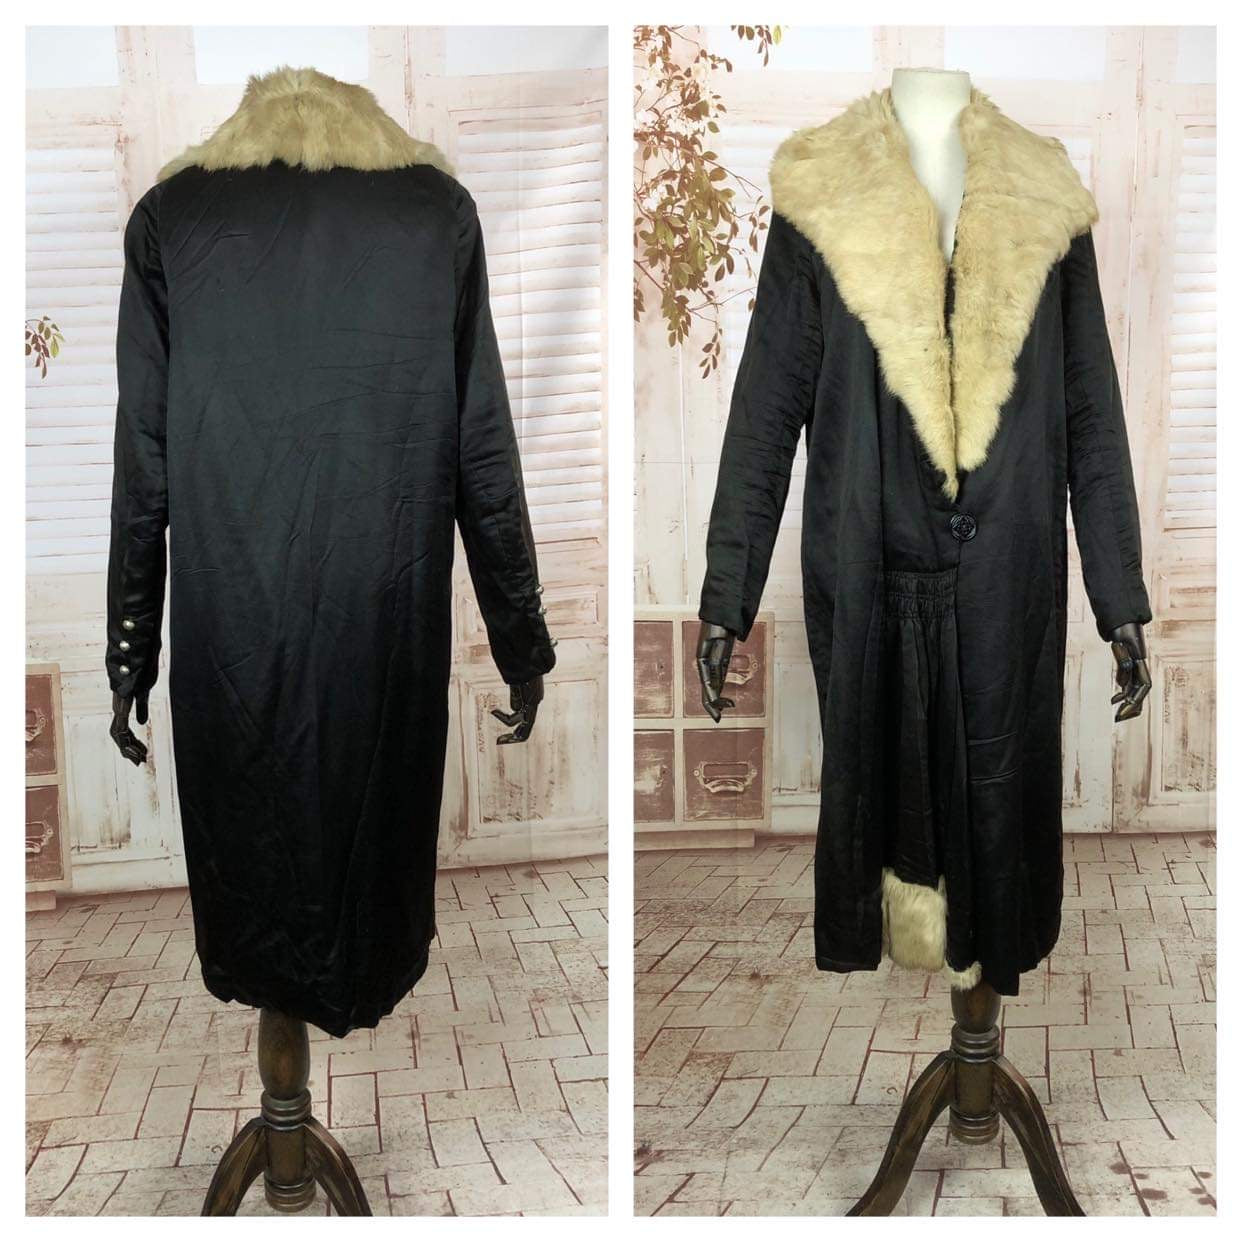 Stunning Original Early 1930s 30s Art Deco Black Satin Coat With Fur Collar And Trim